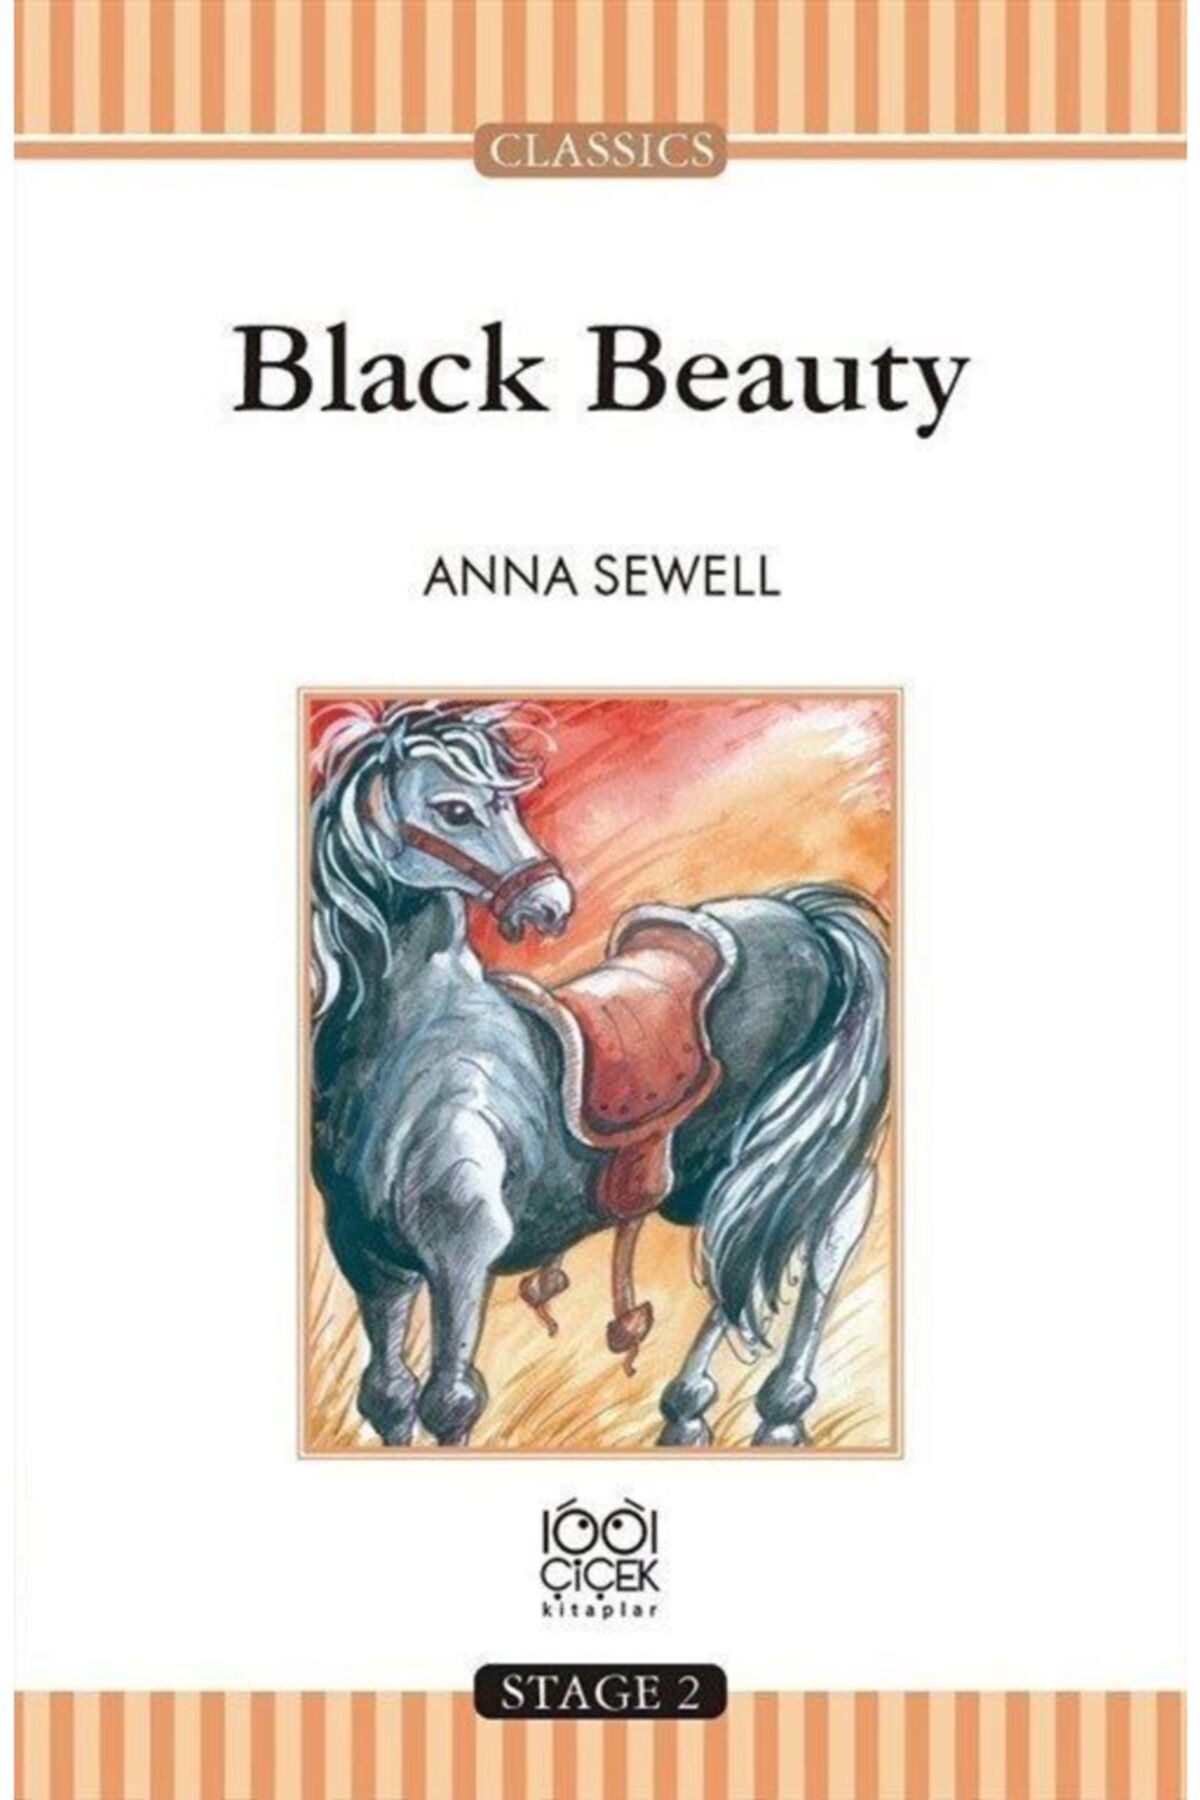 1001 Çiçek Kitaplar Black Beauty - Stage 2 Anna Sewell - Anna Sewell